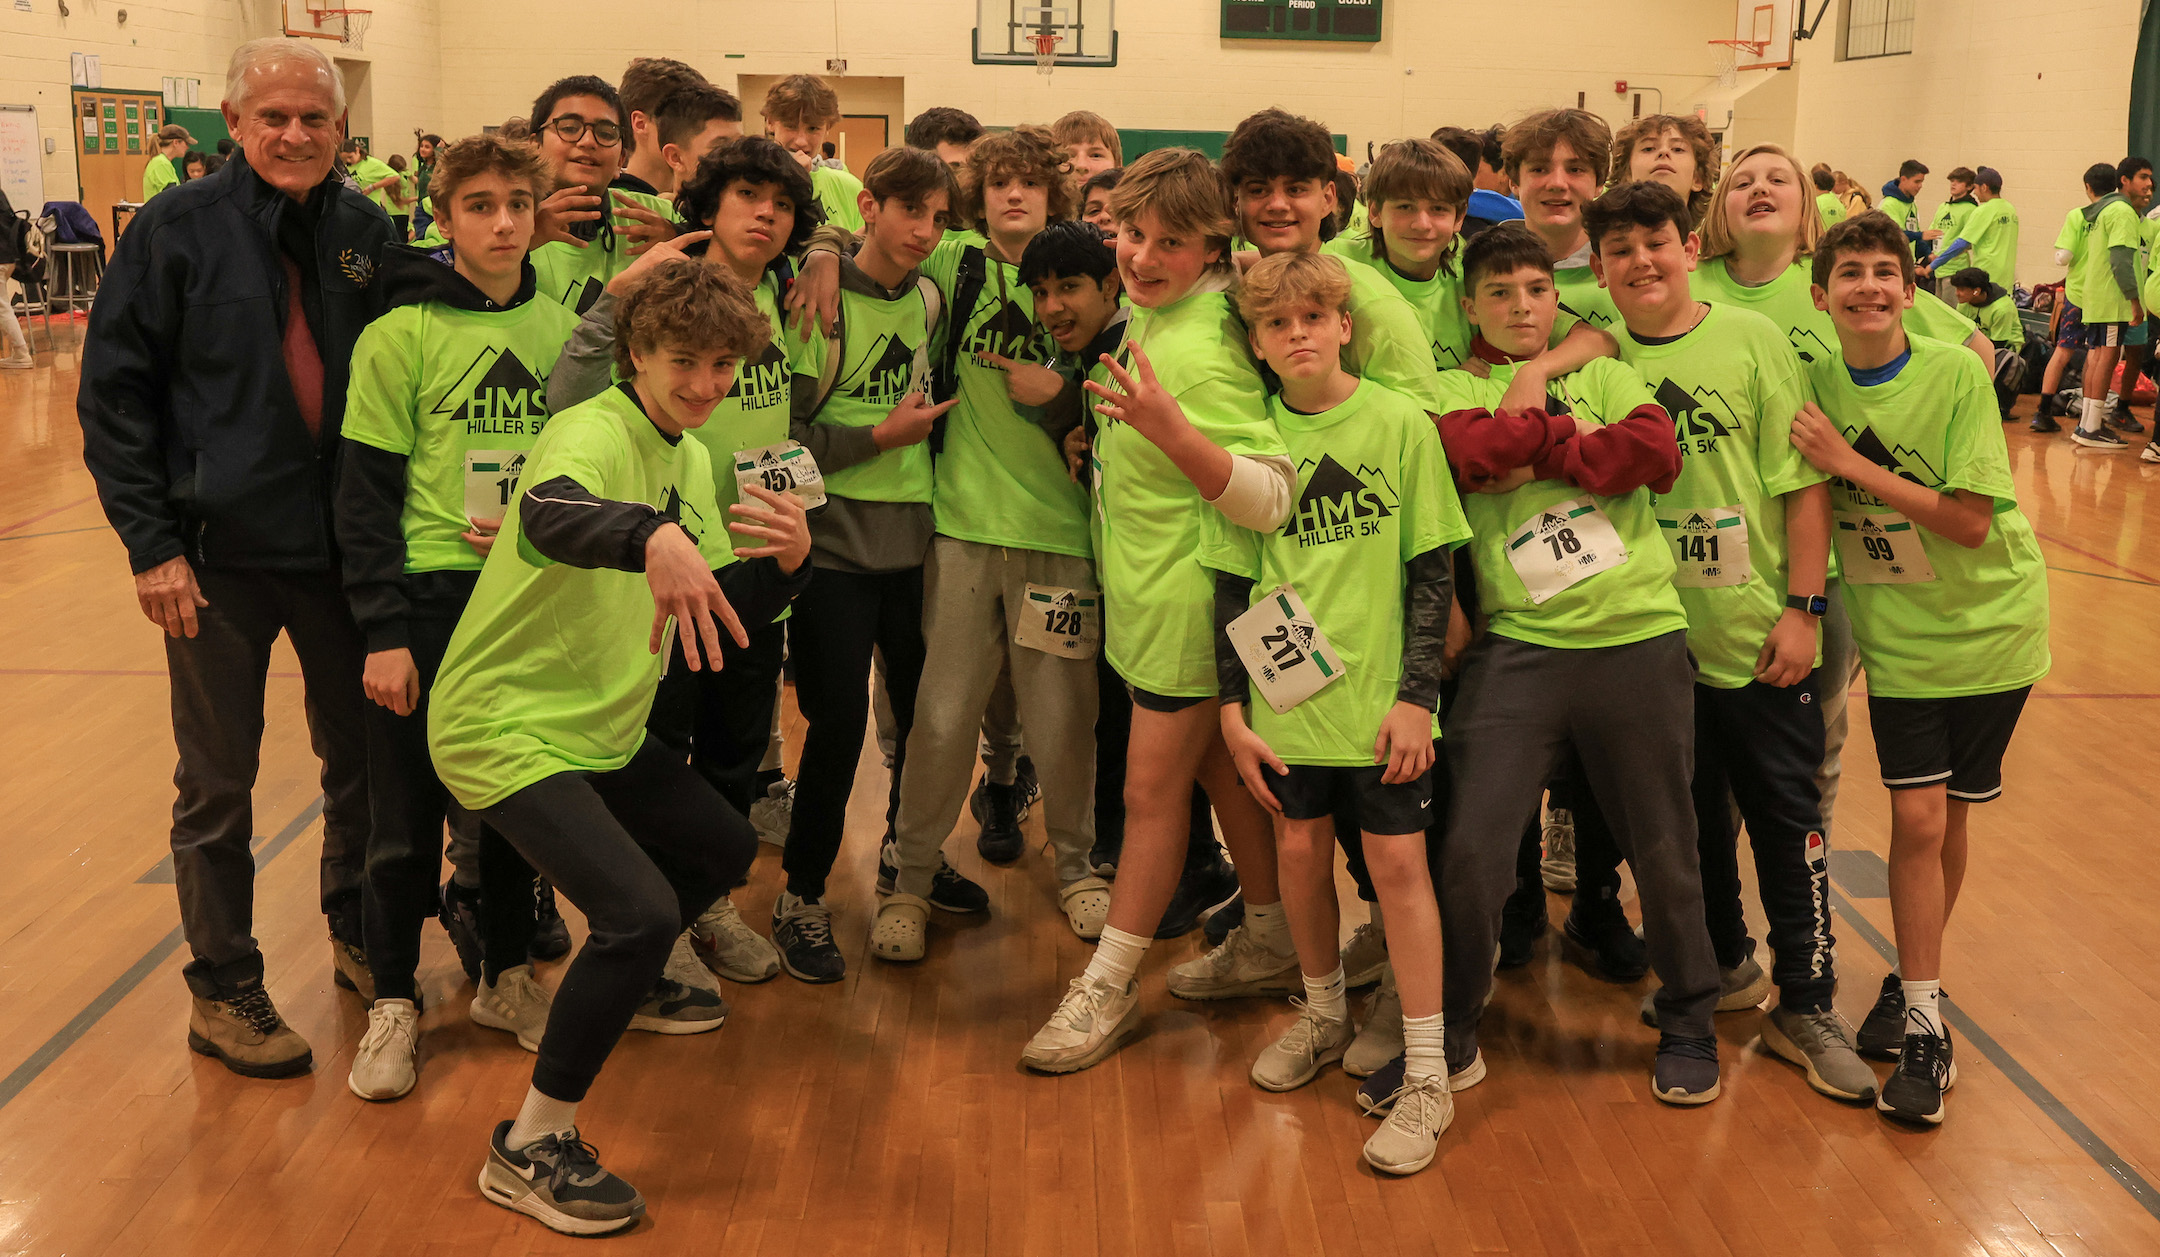 Photos: Hiller 5K at Hopkinton Middle School